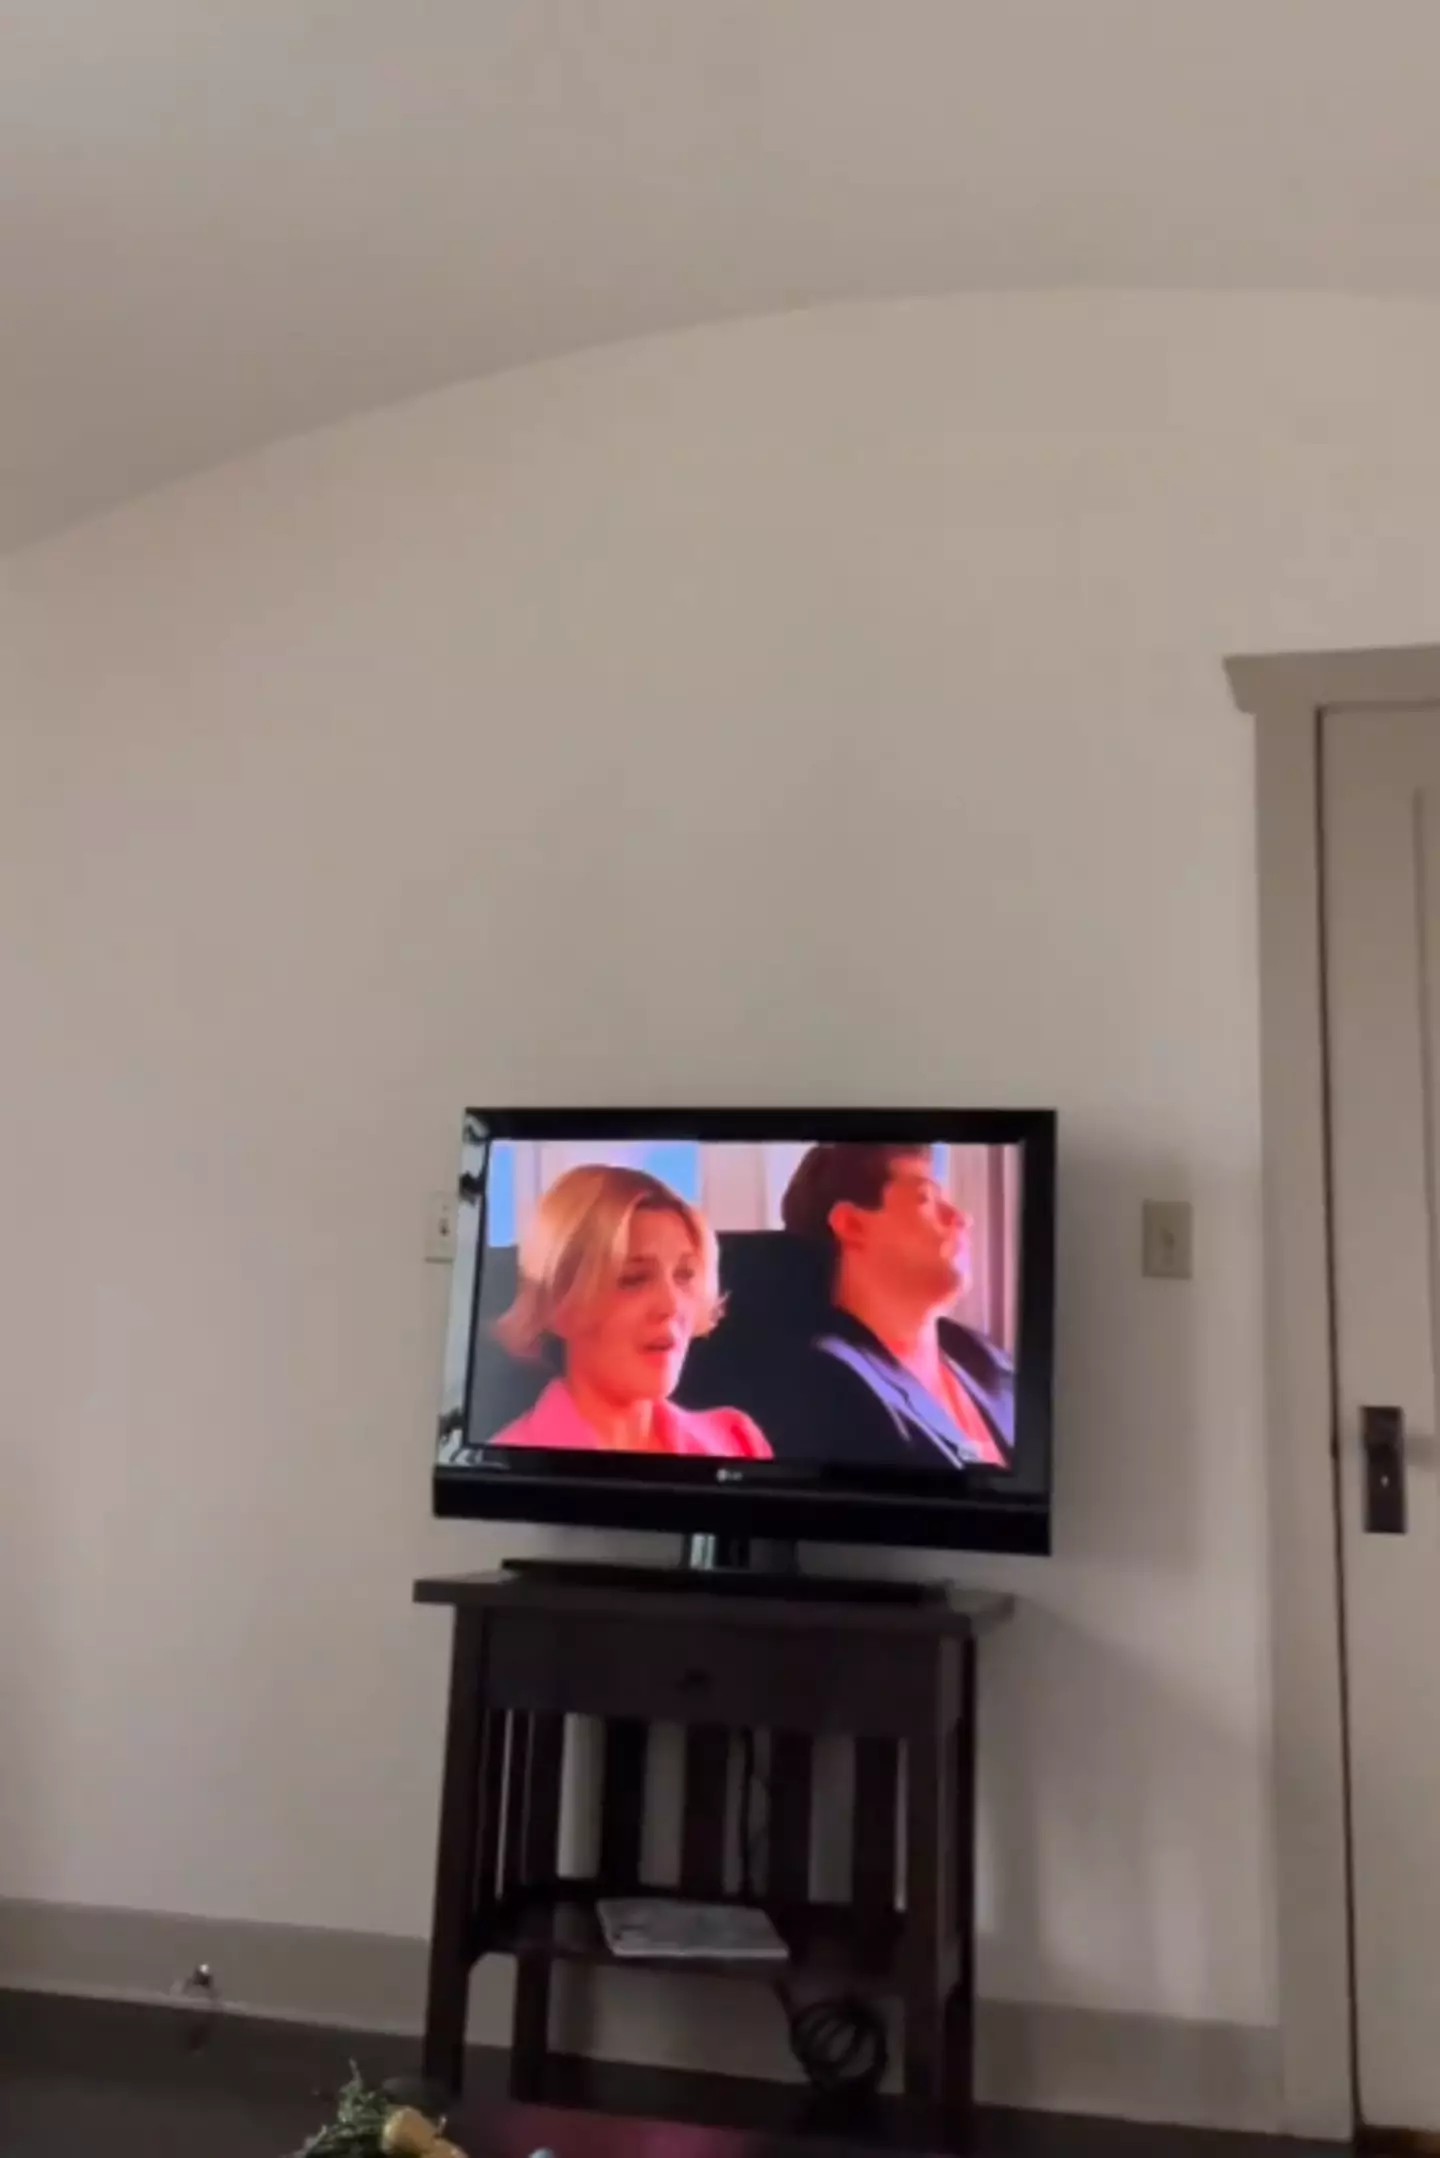 Drew Barrymore's TV took fans by surprise.